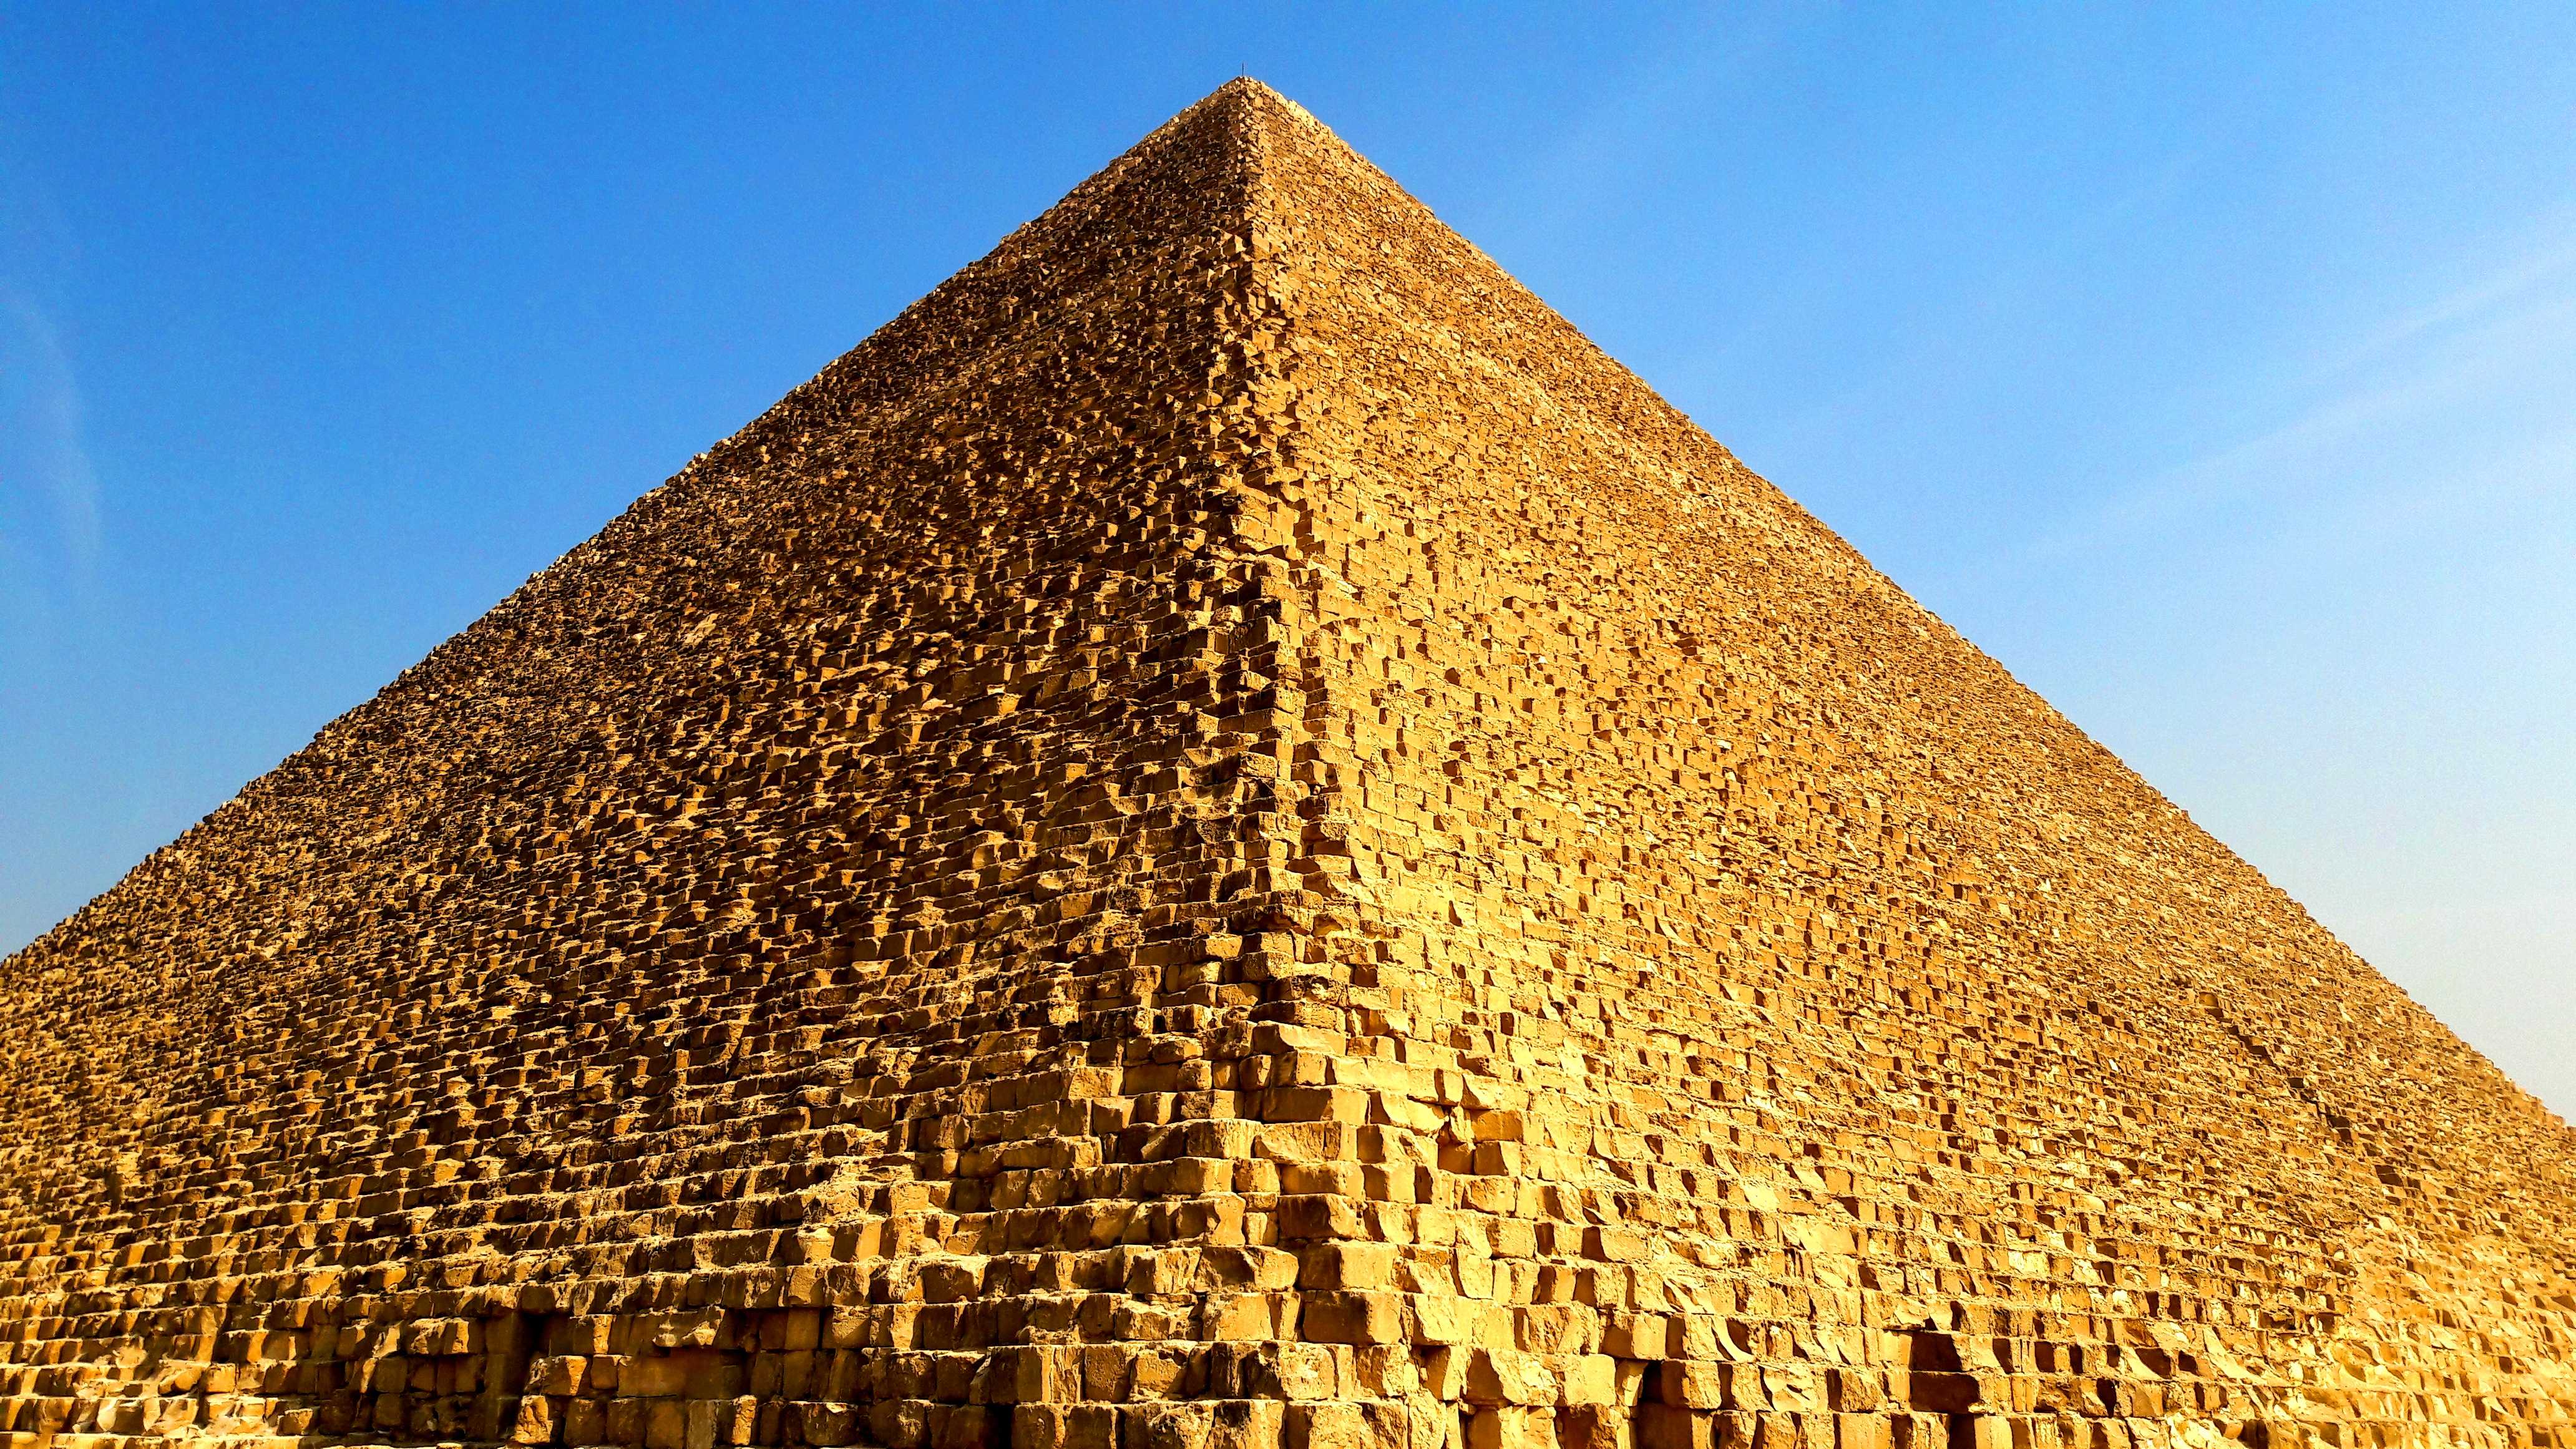 Назовите древние чудеса света. Пирамида Хеопса. 7 Чудес света пирамида Хеопса. Пирамида Хеопса Золотая вершина. Пирамида Хуфу семь чудес света.